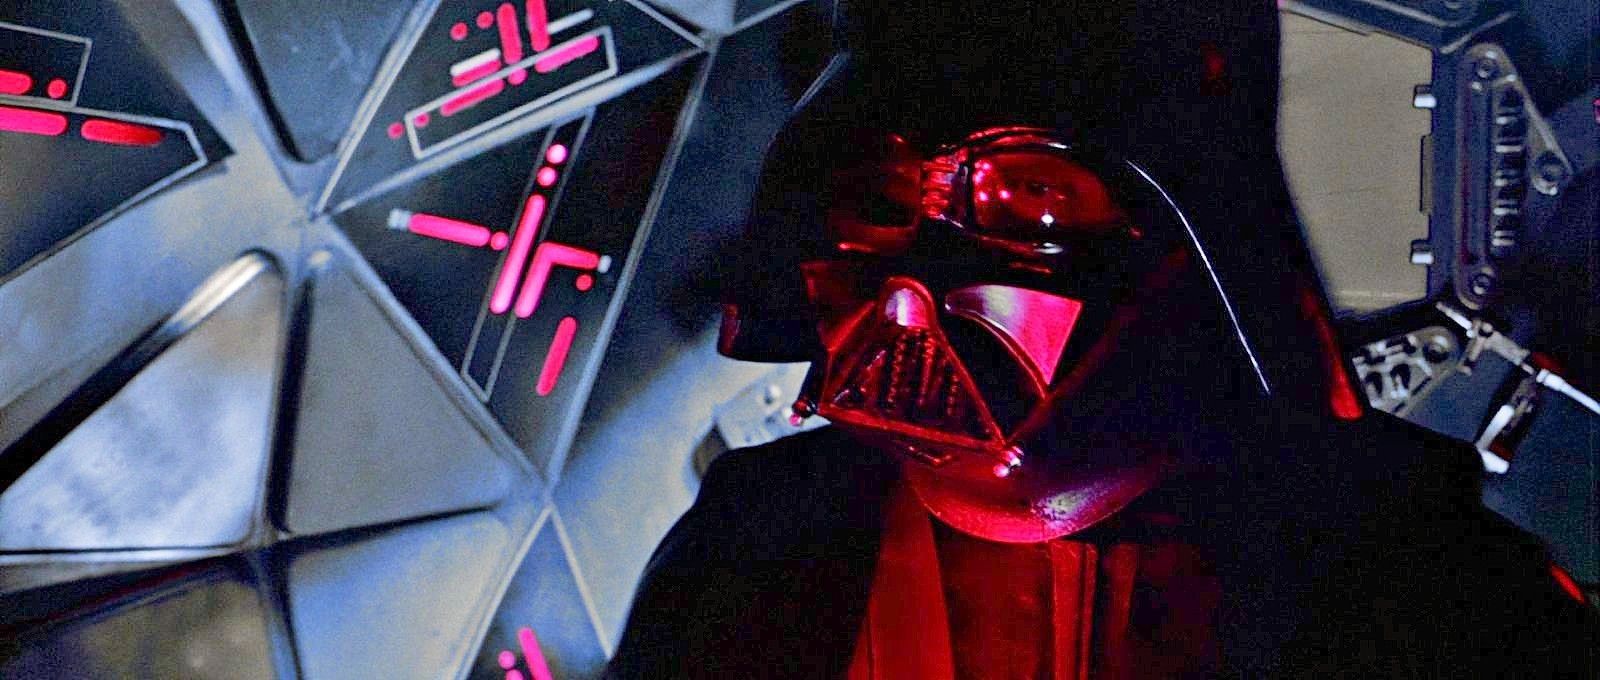 A visual of Darth Vader's eye through the mask as he pilots his ship.